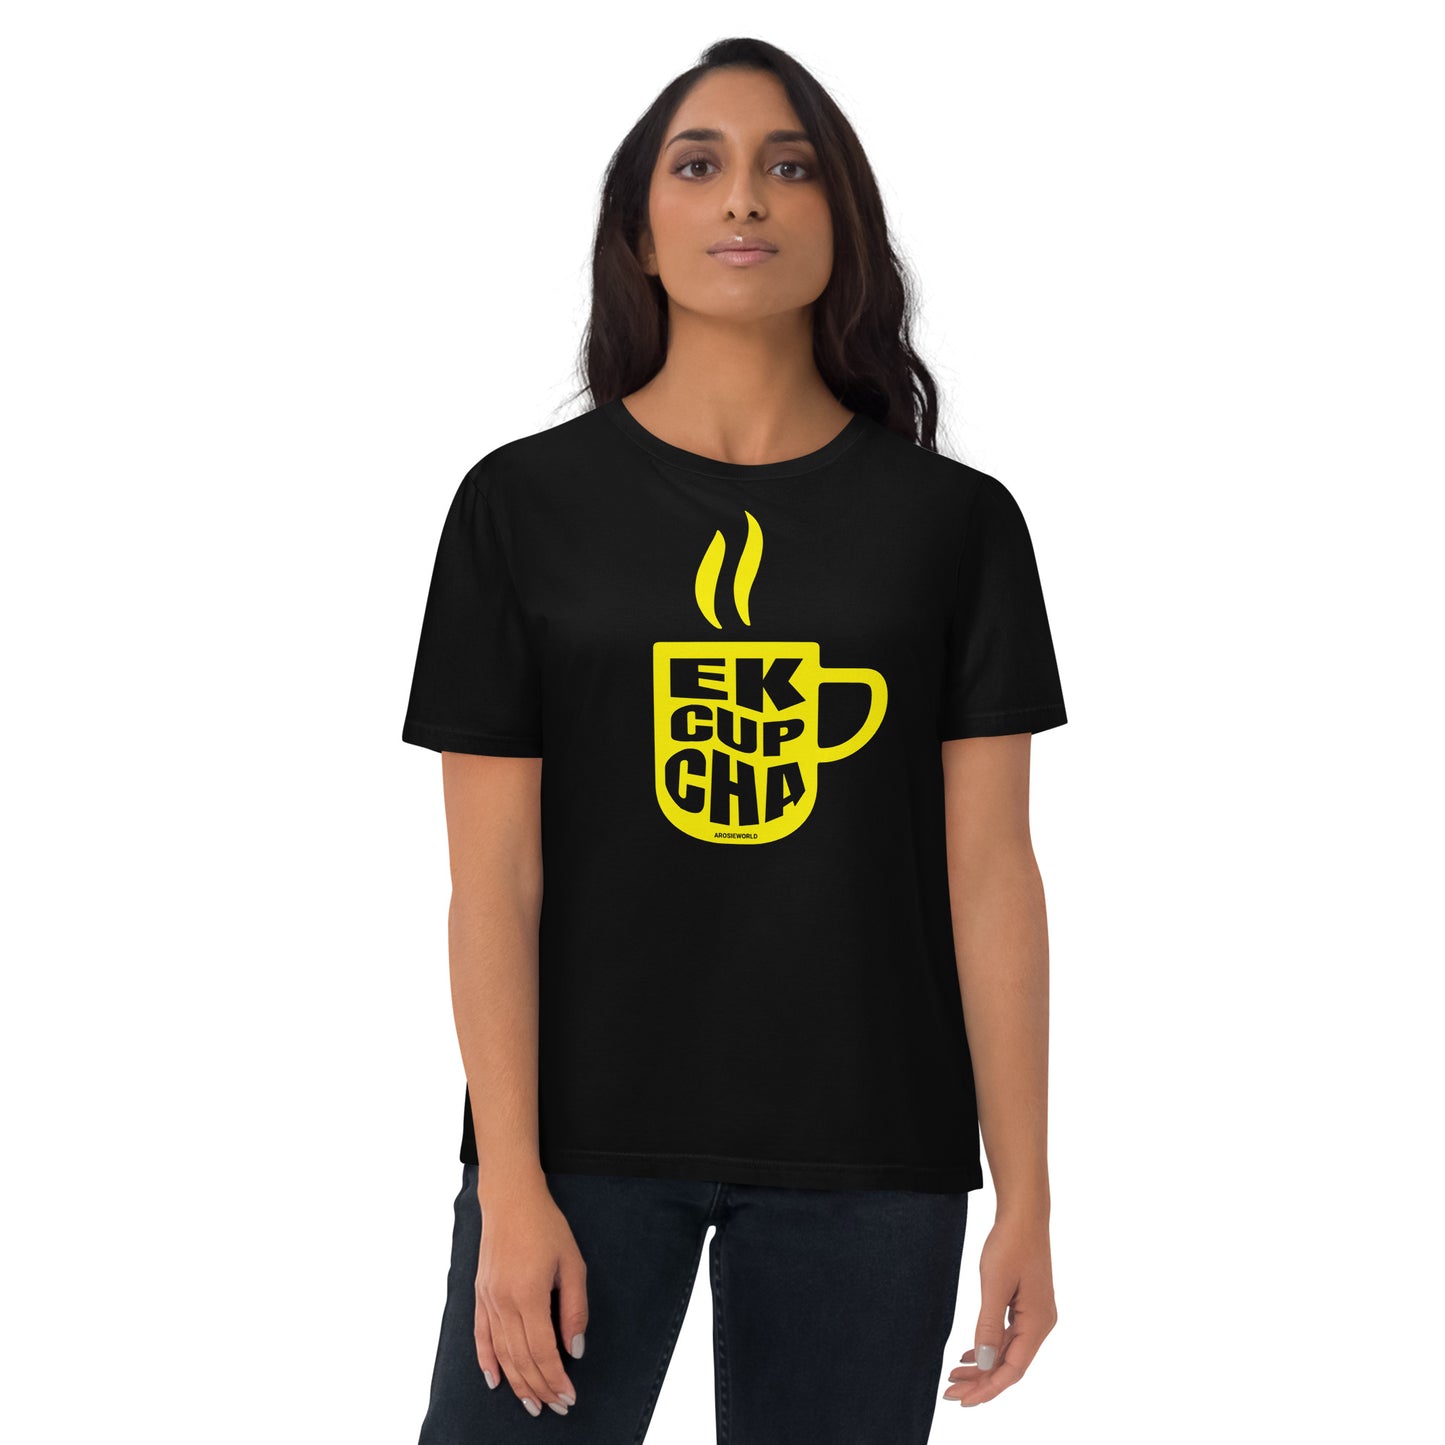 EK CUP CHA Unisex organic cotton t-shirt